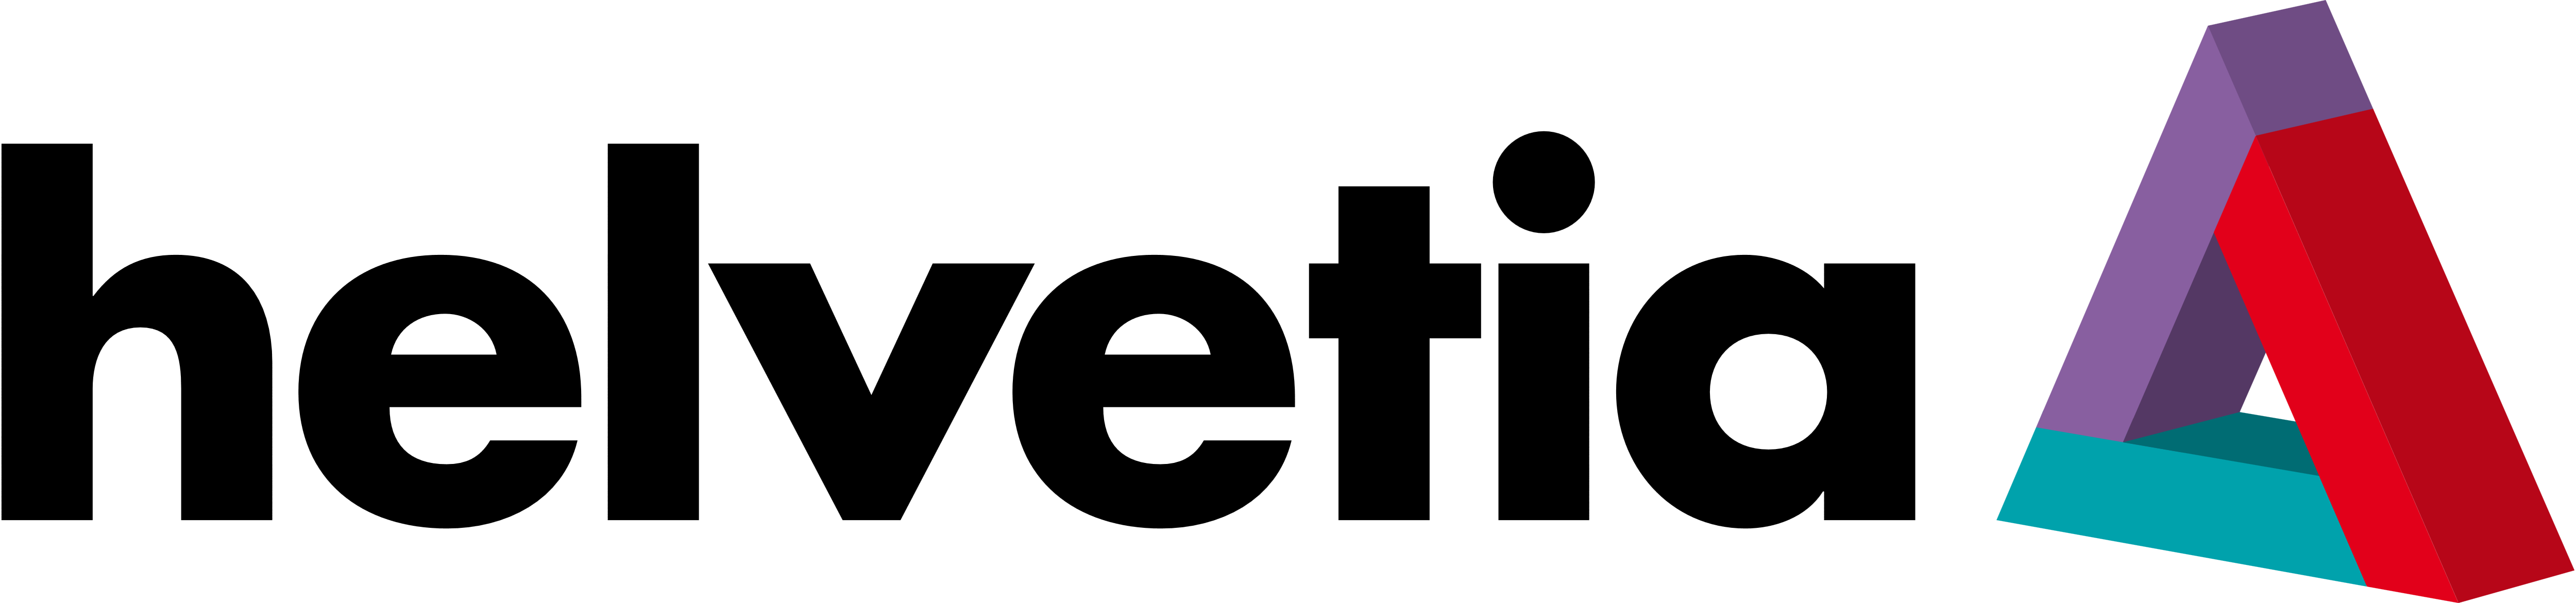 Helvetia logo logo